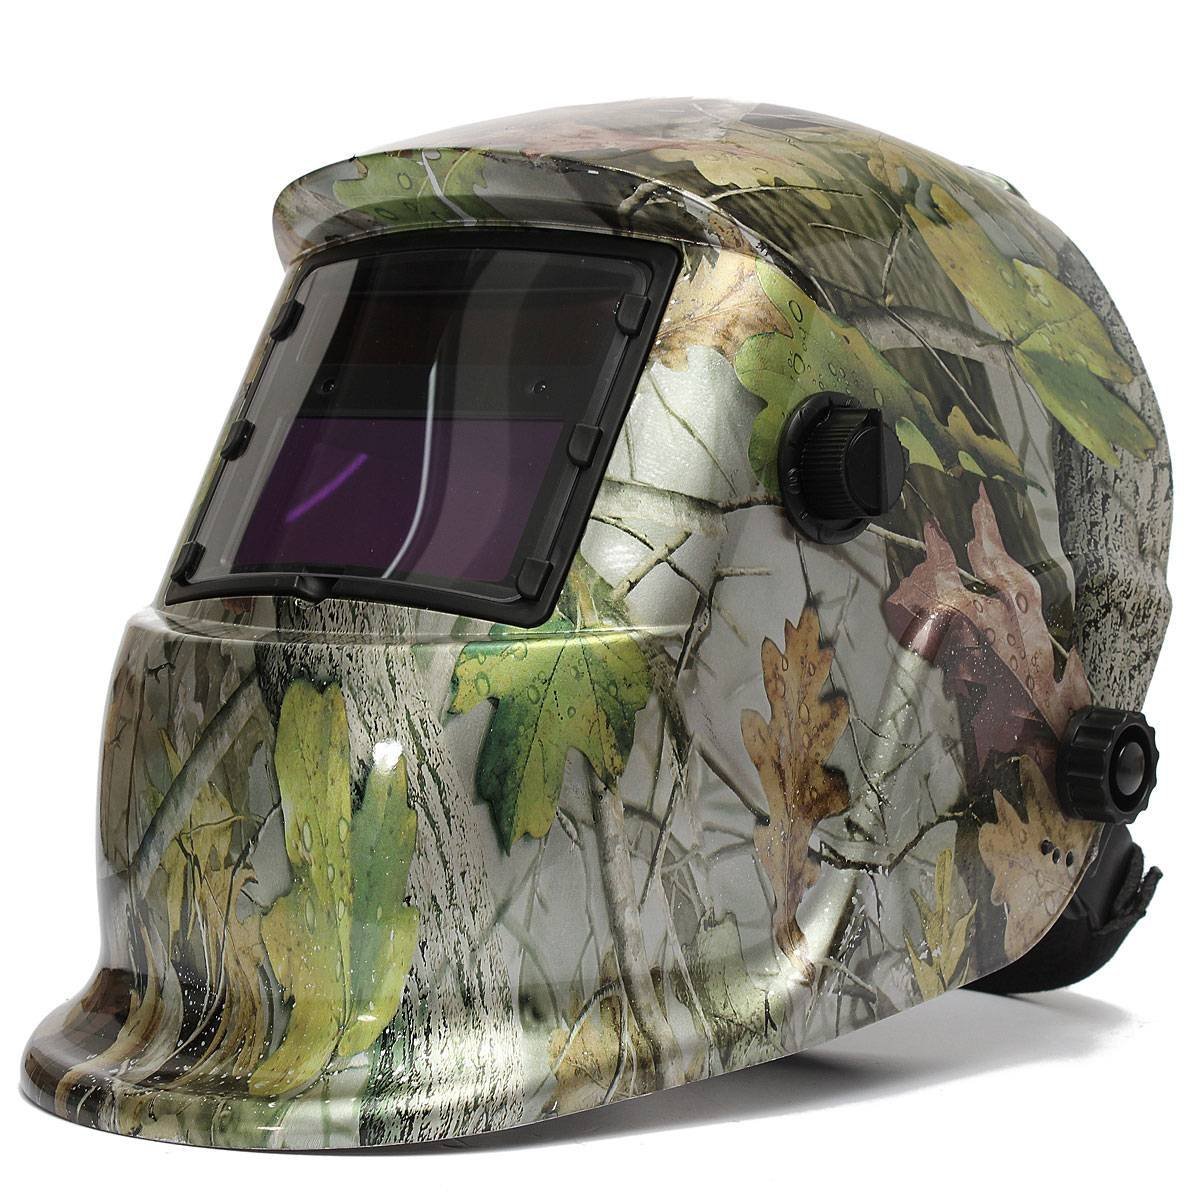 Lassen masker lashelm zonne-energie automatische (zonne-energie gebruik voor refill) drie extra bril Glas camouflage